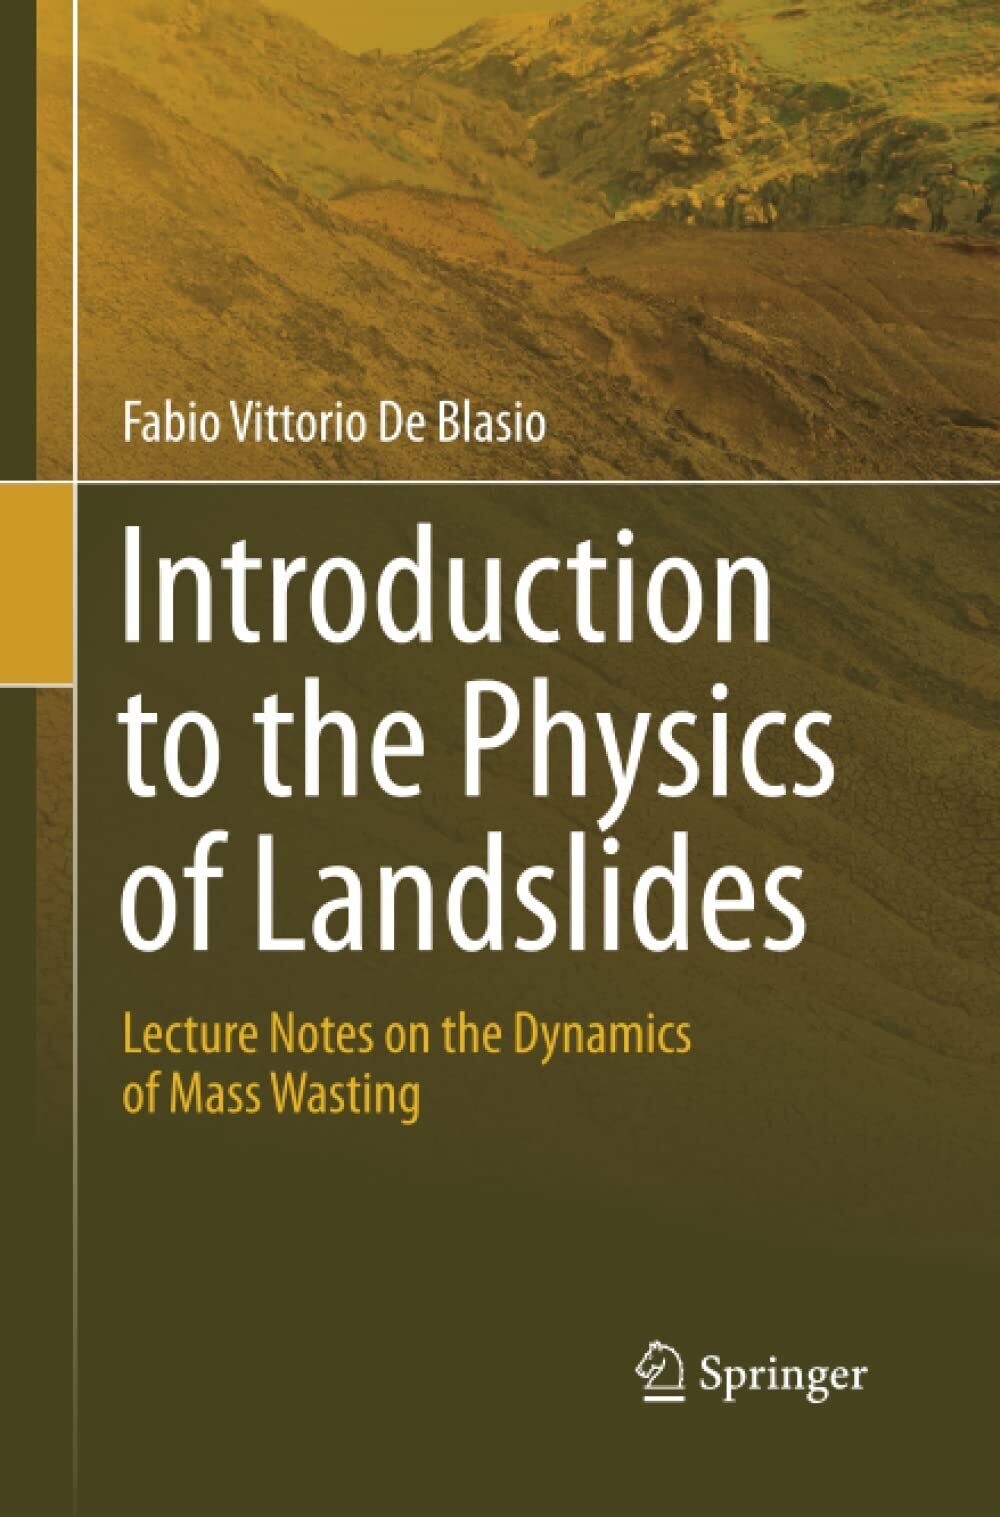 Introduction to the Physics of Landslides - De Blasio - Springer, 2014